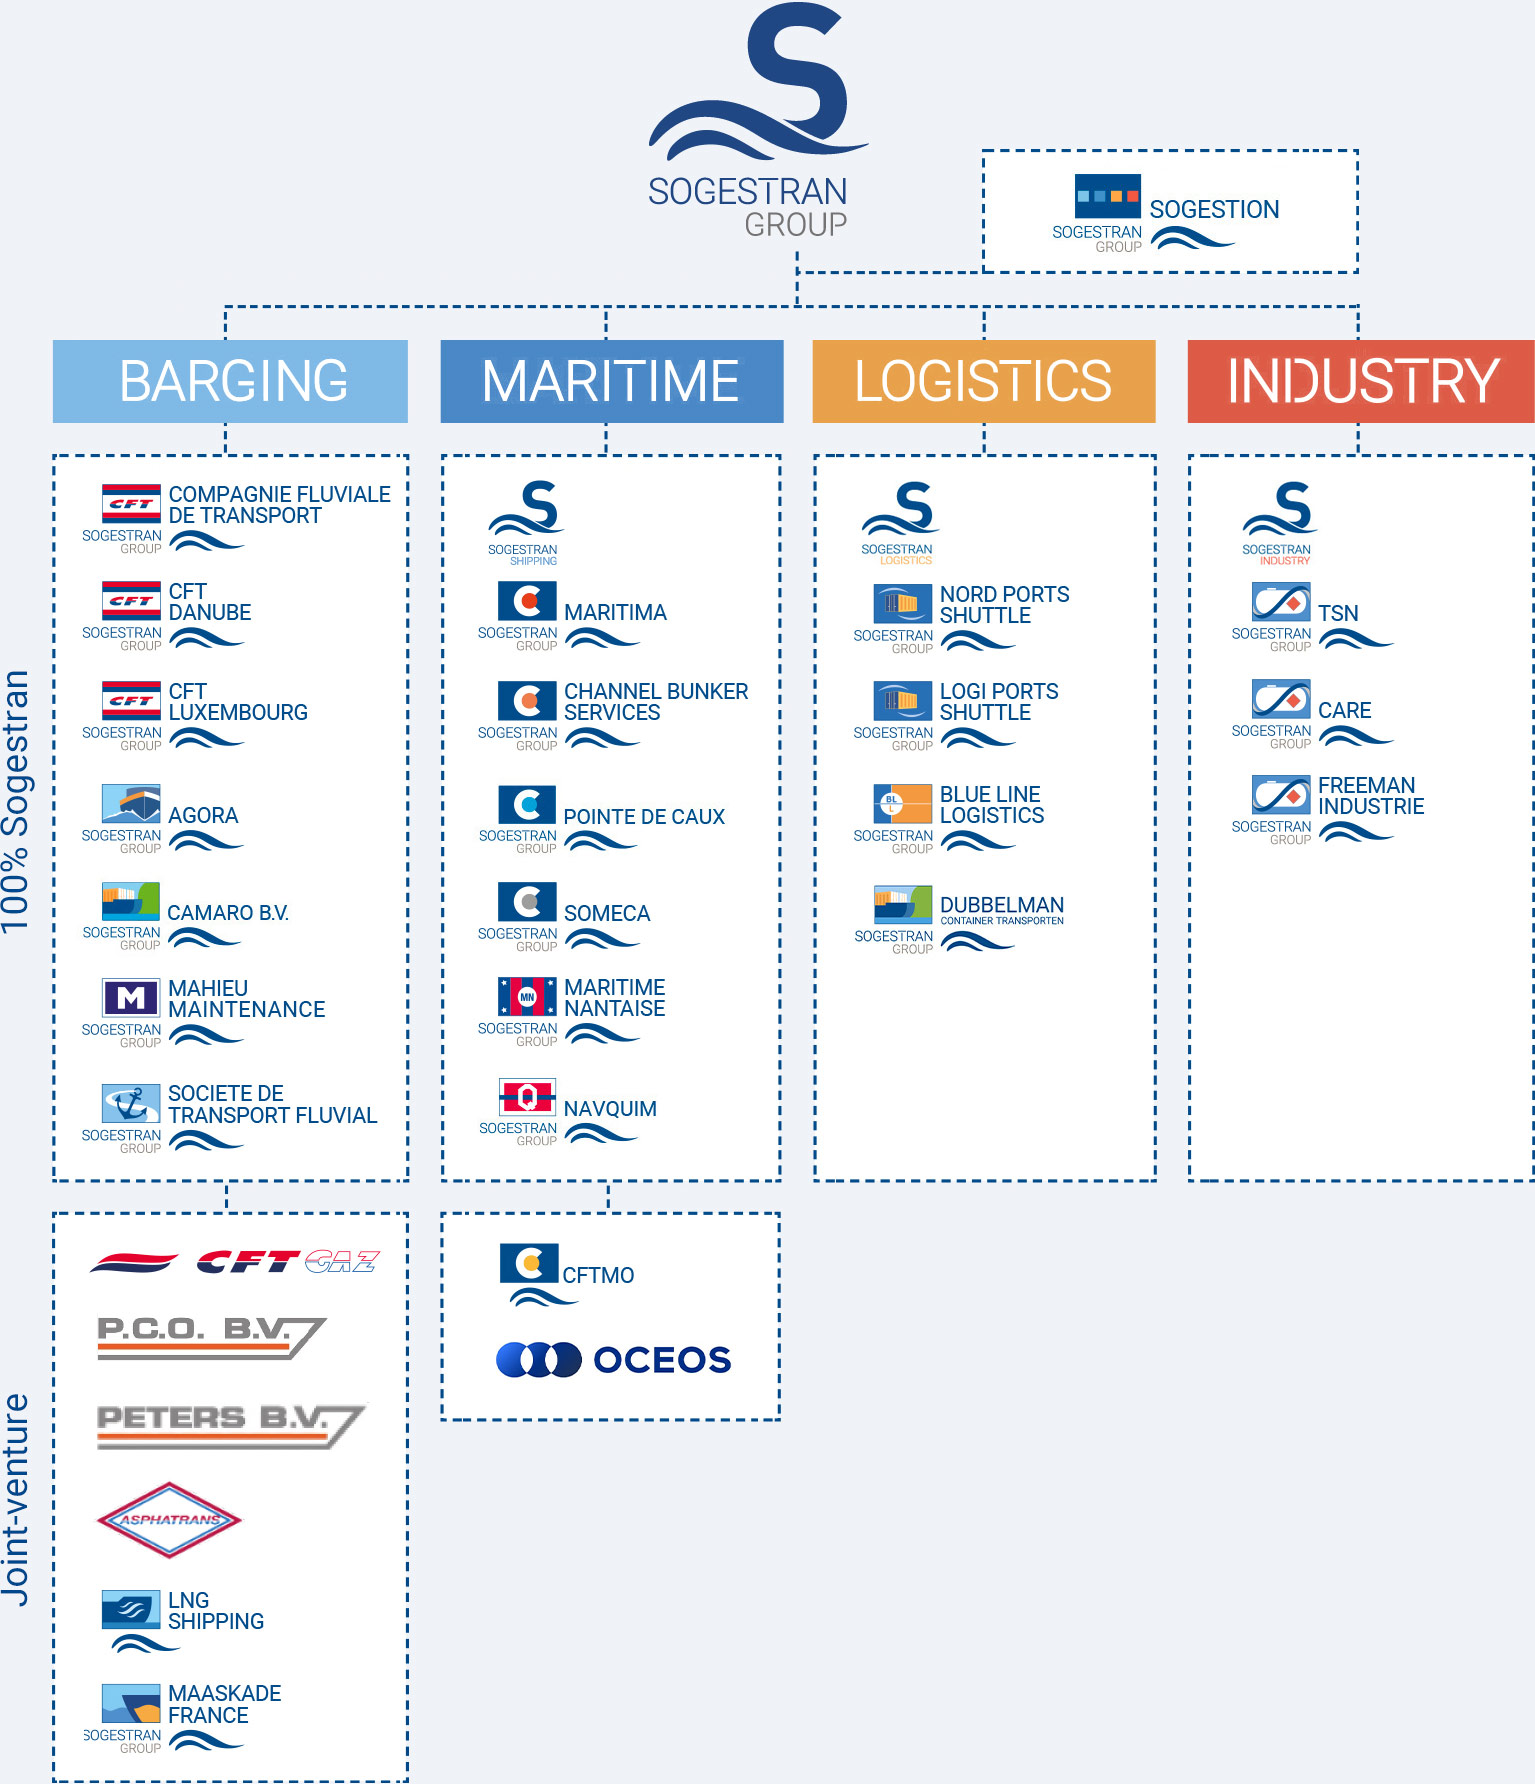 Simplified organisation chart of Sogestran group’s companies